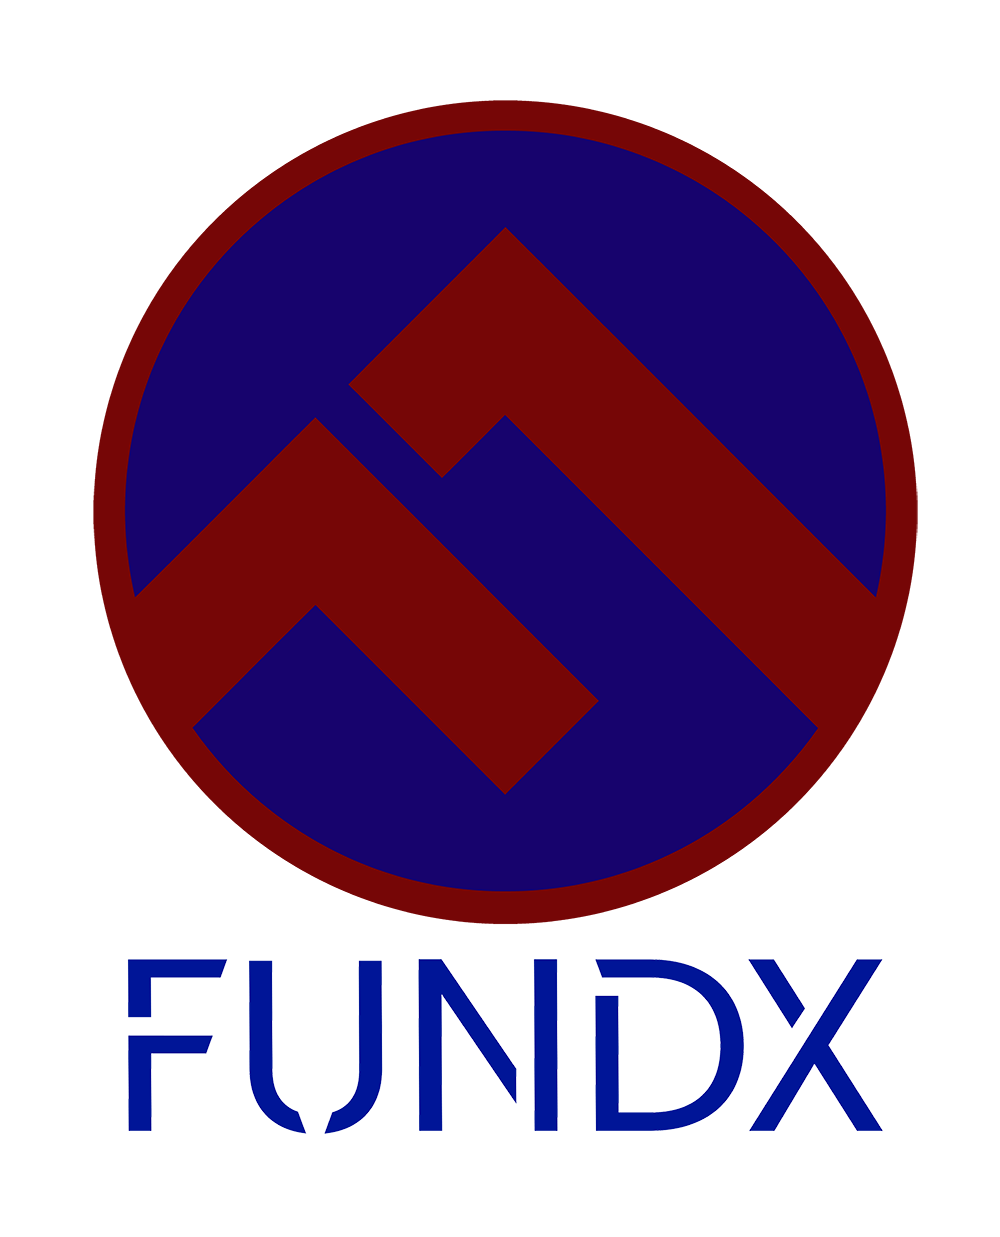 fundx crypto